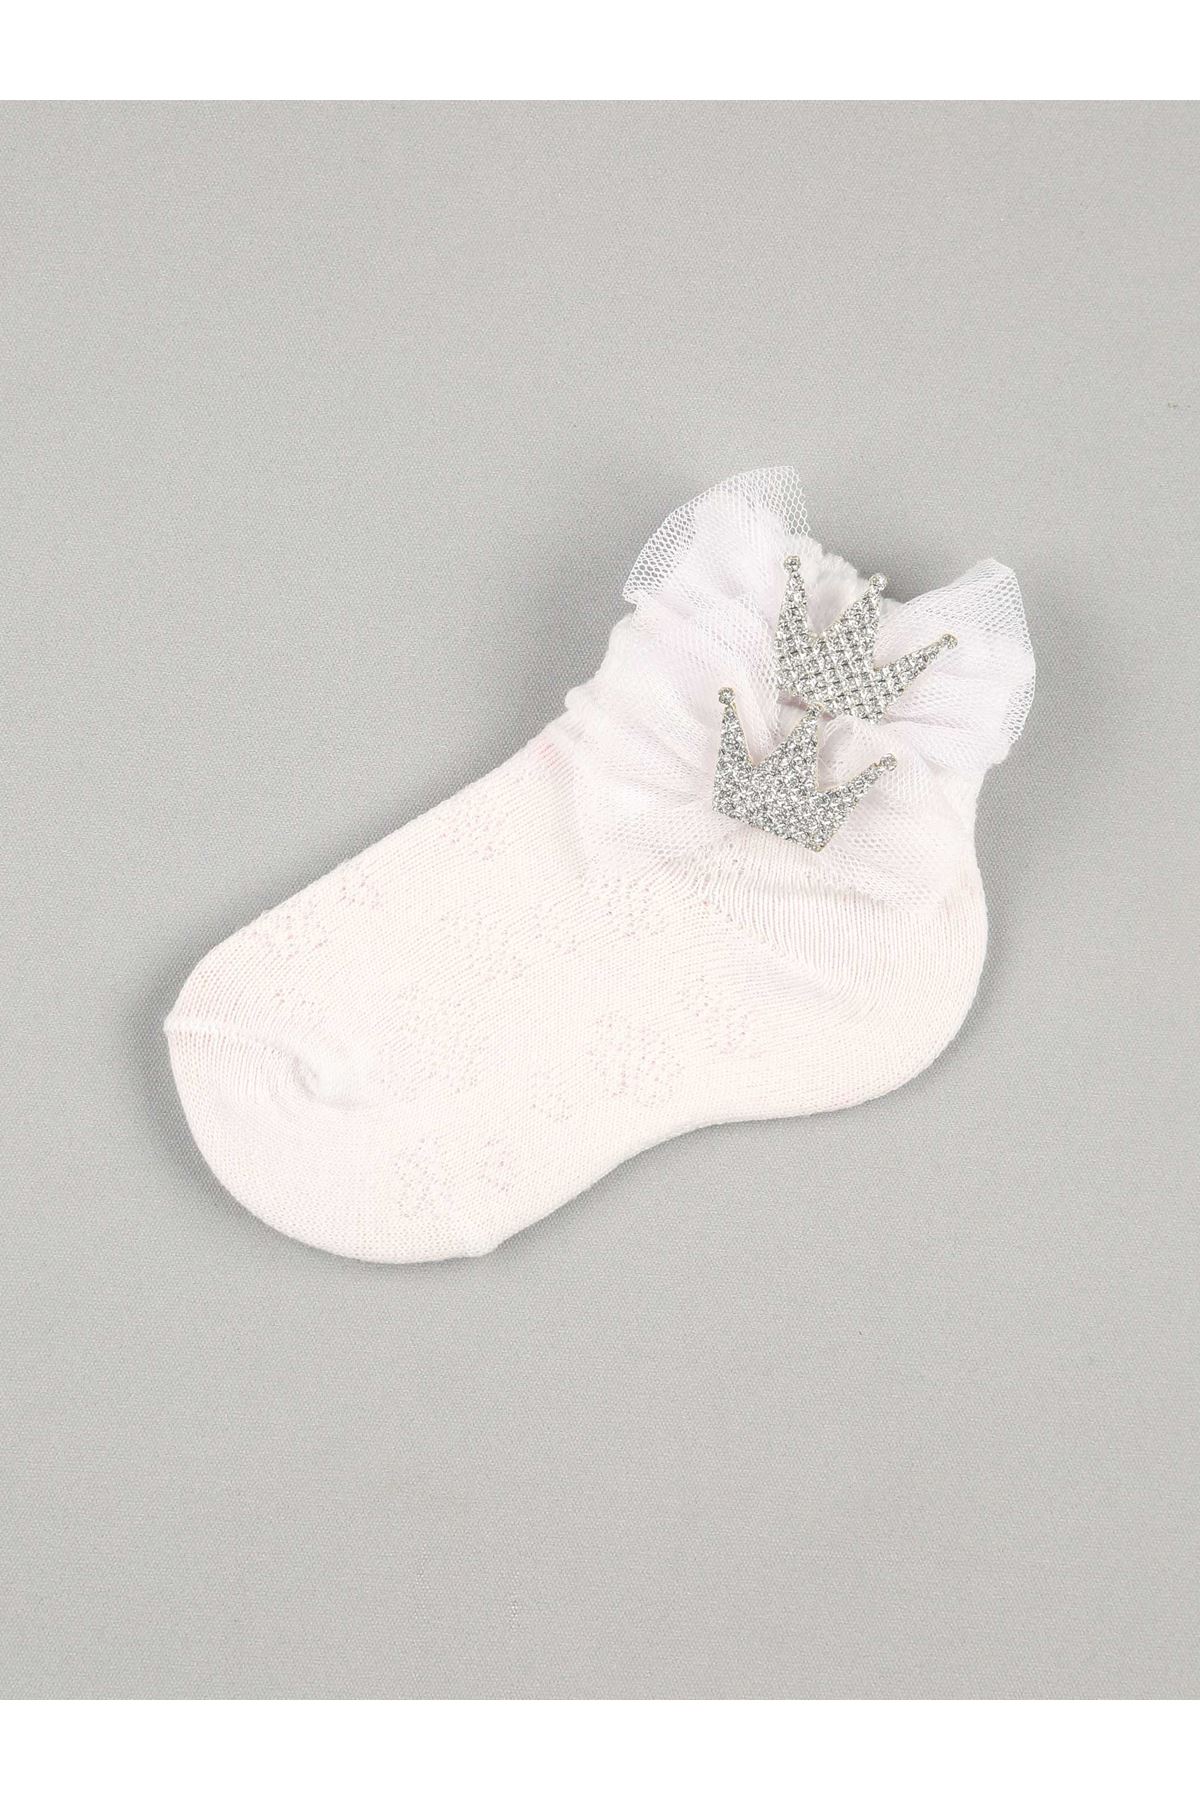 White Bowknot Crowned Girl Socks